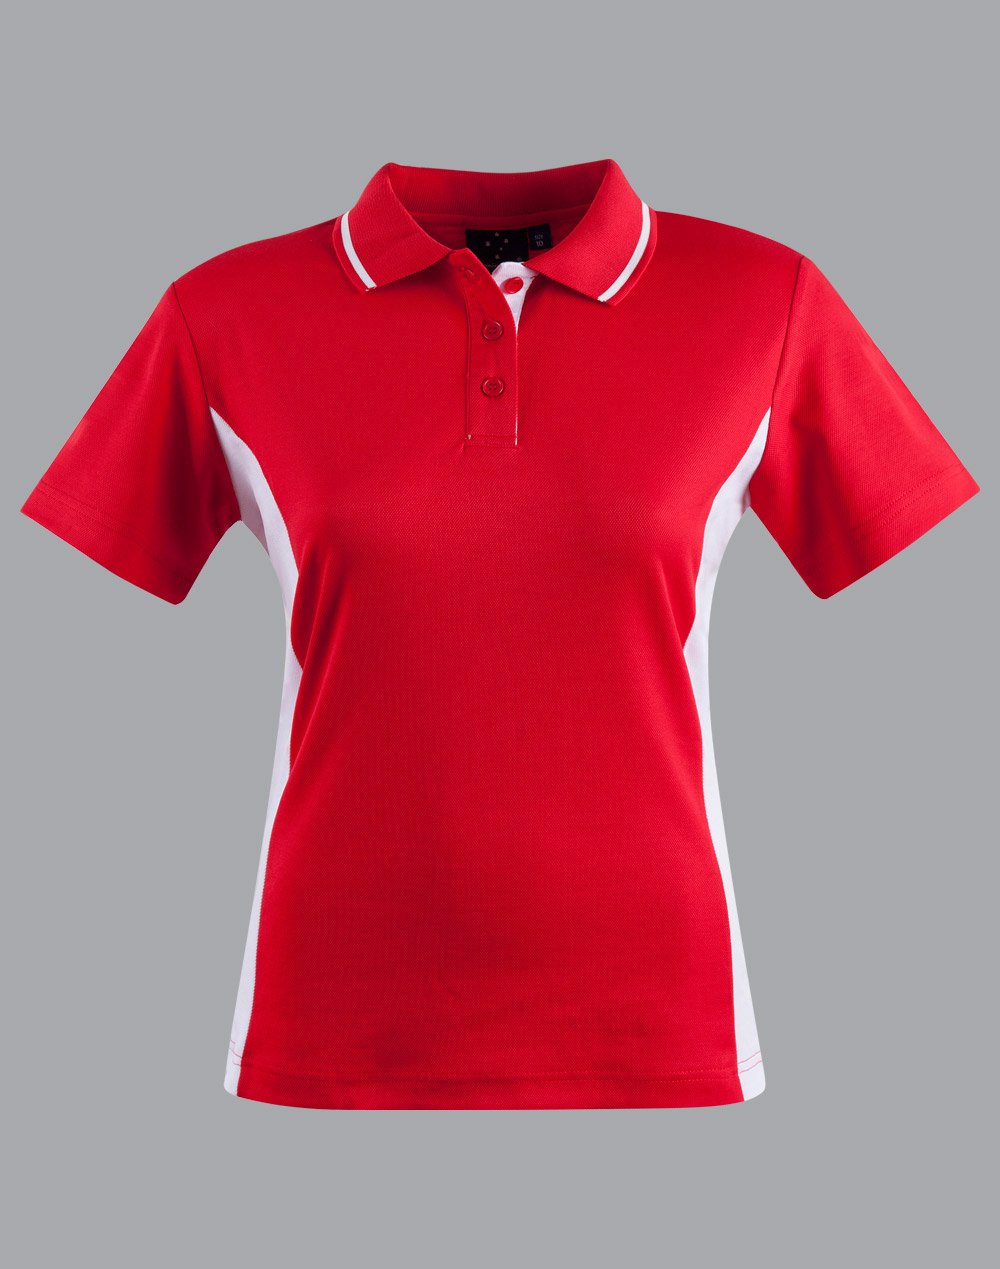 Teammate Polo Shirt Ladies  PS74 Casual Wear Winning Spirit 8 Red/White 